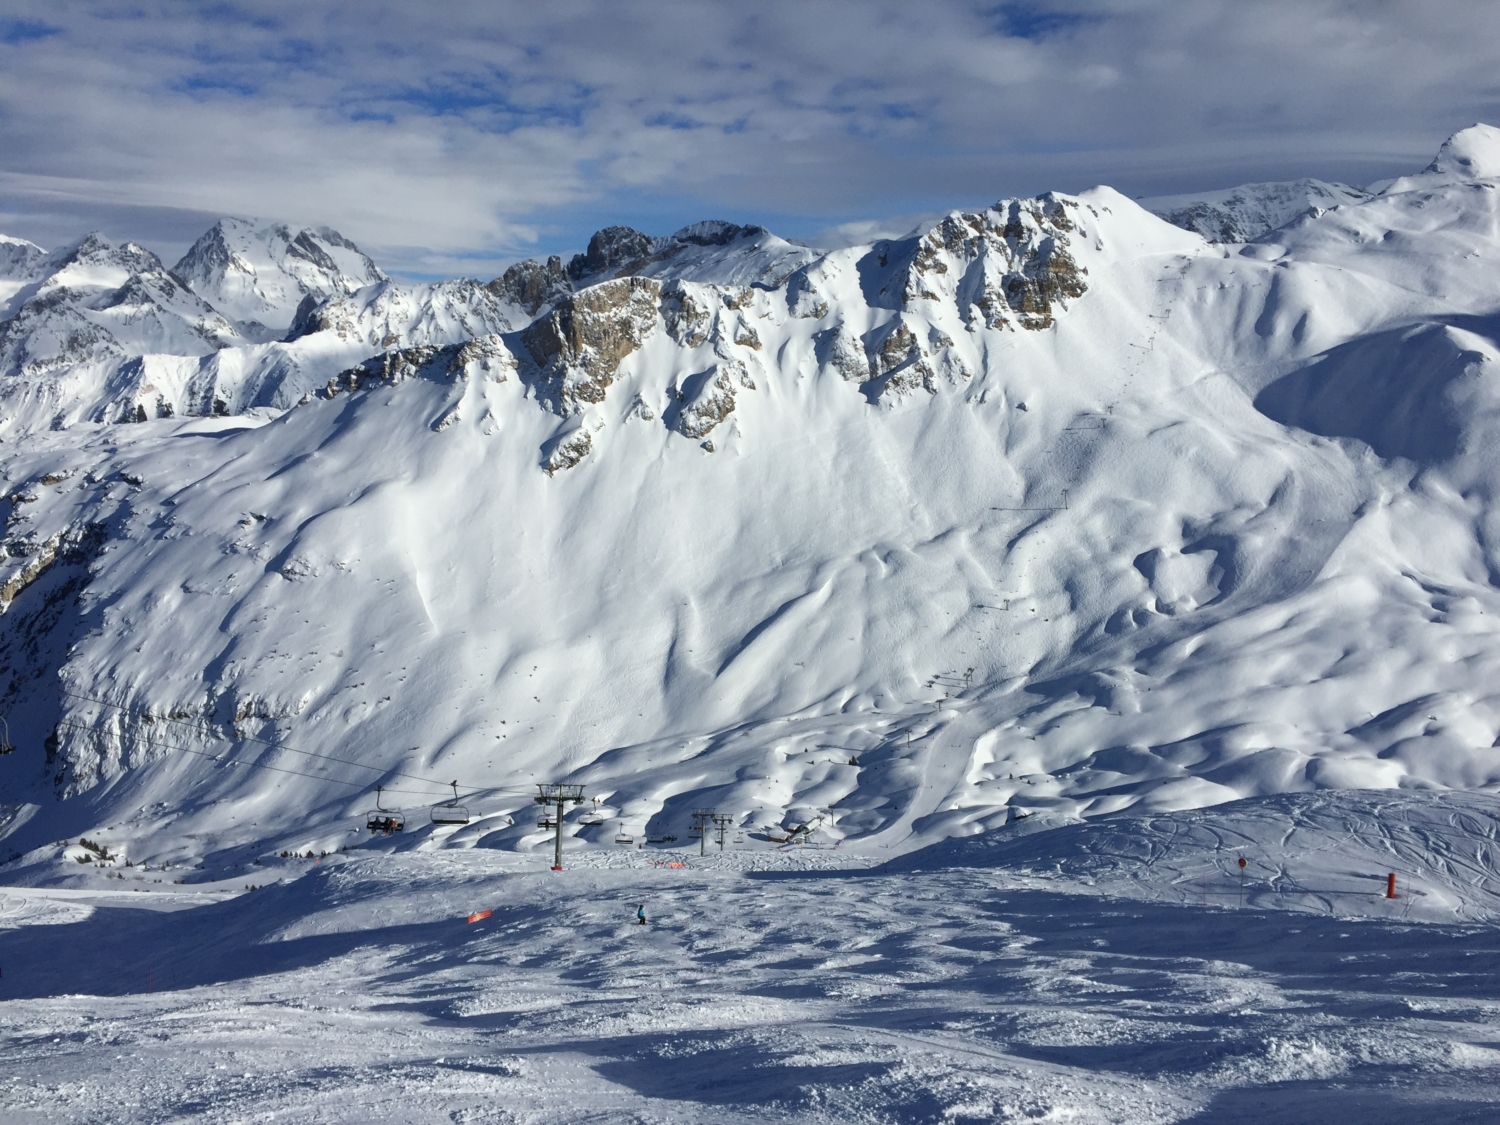 Meilleures stations de ski : Courchevel, 3 Vallées